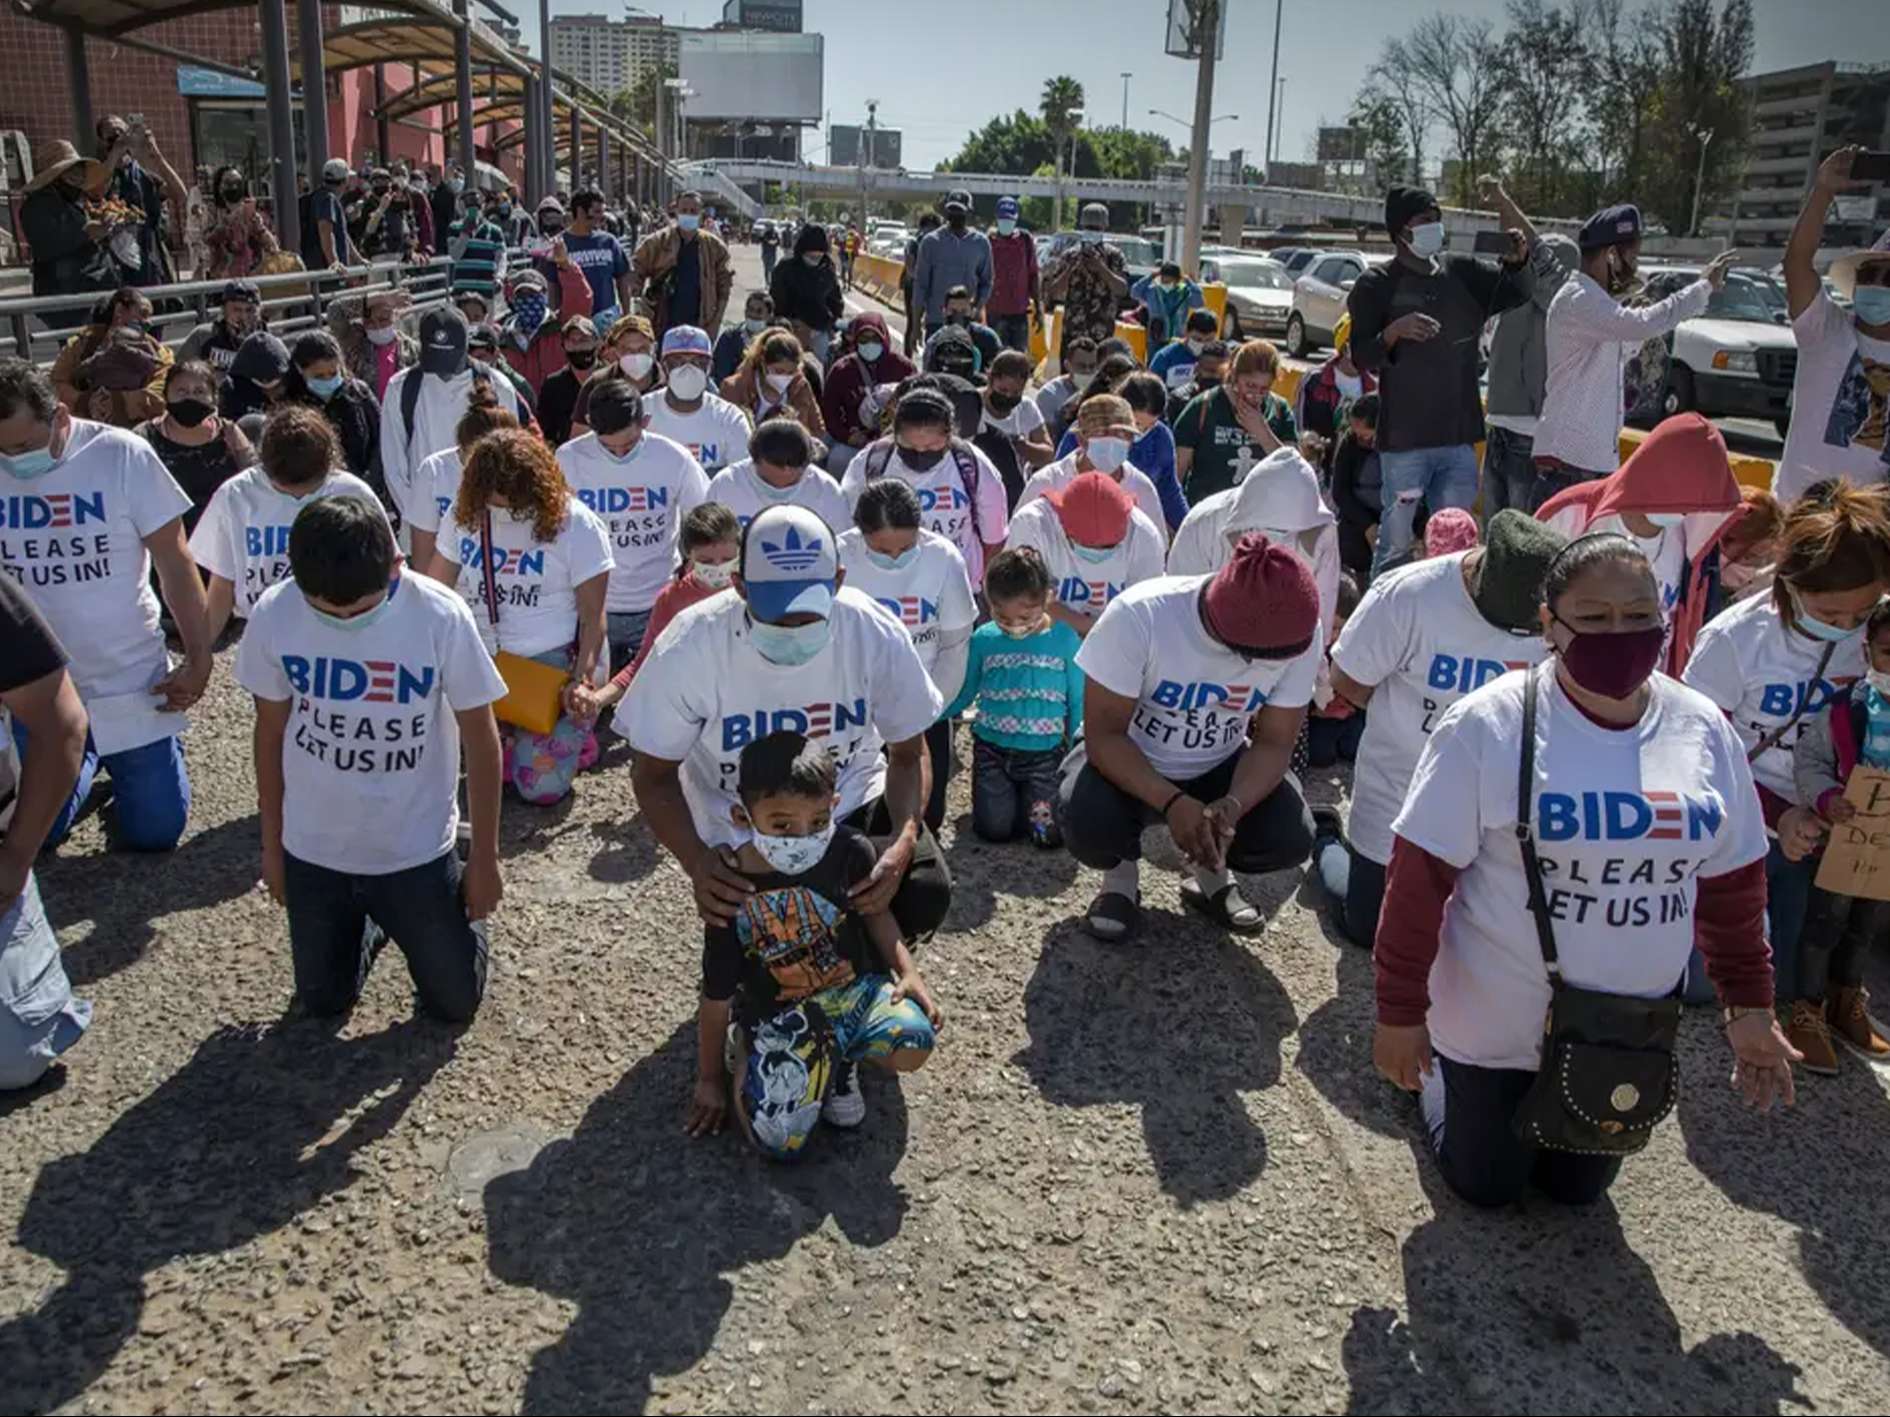 Migrant at U.S. Mexico Border Sports Biden Harris Shirt, Professes Ignorance of Names